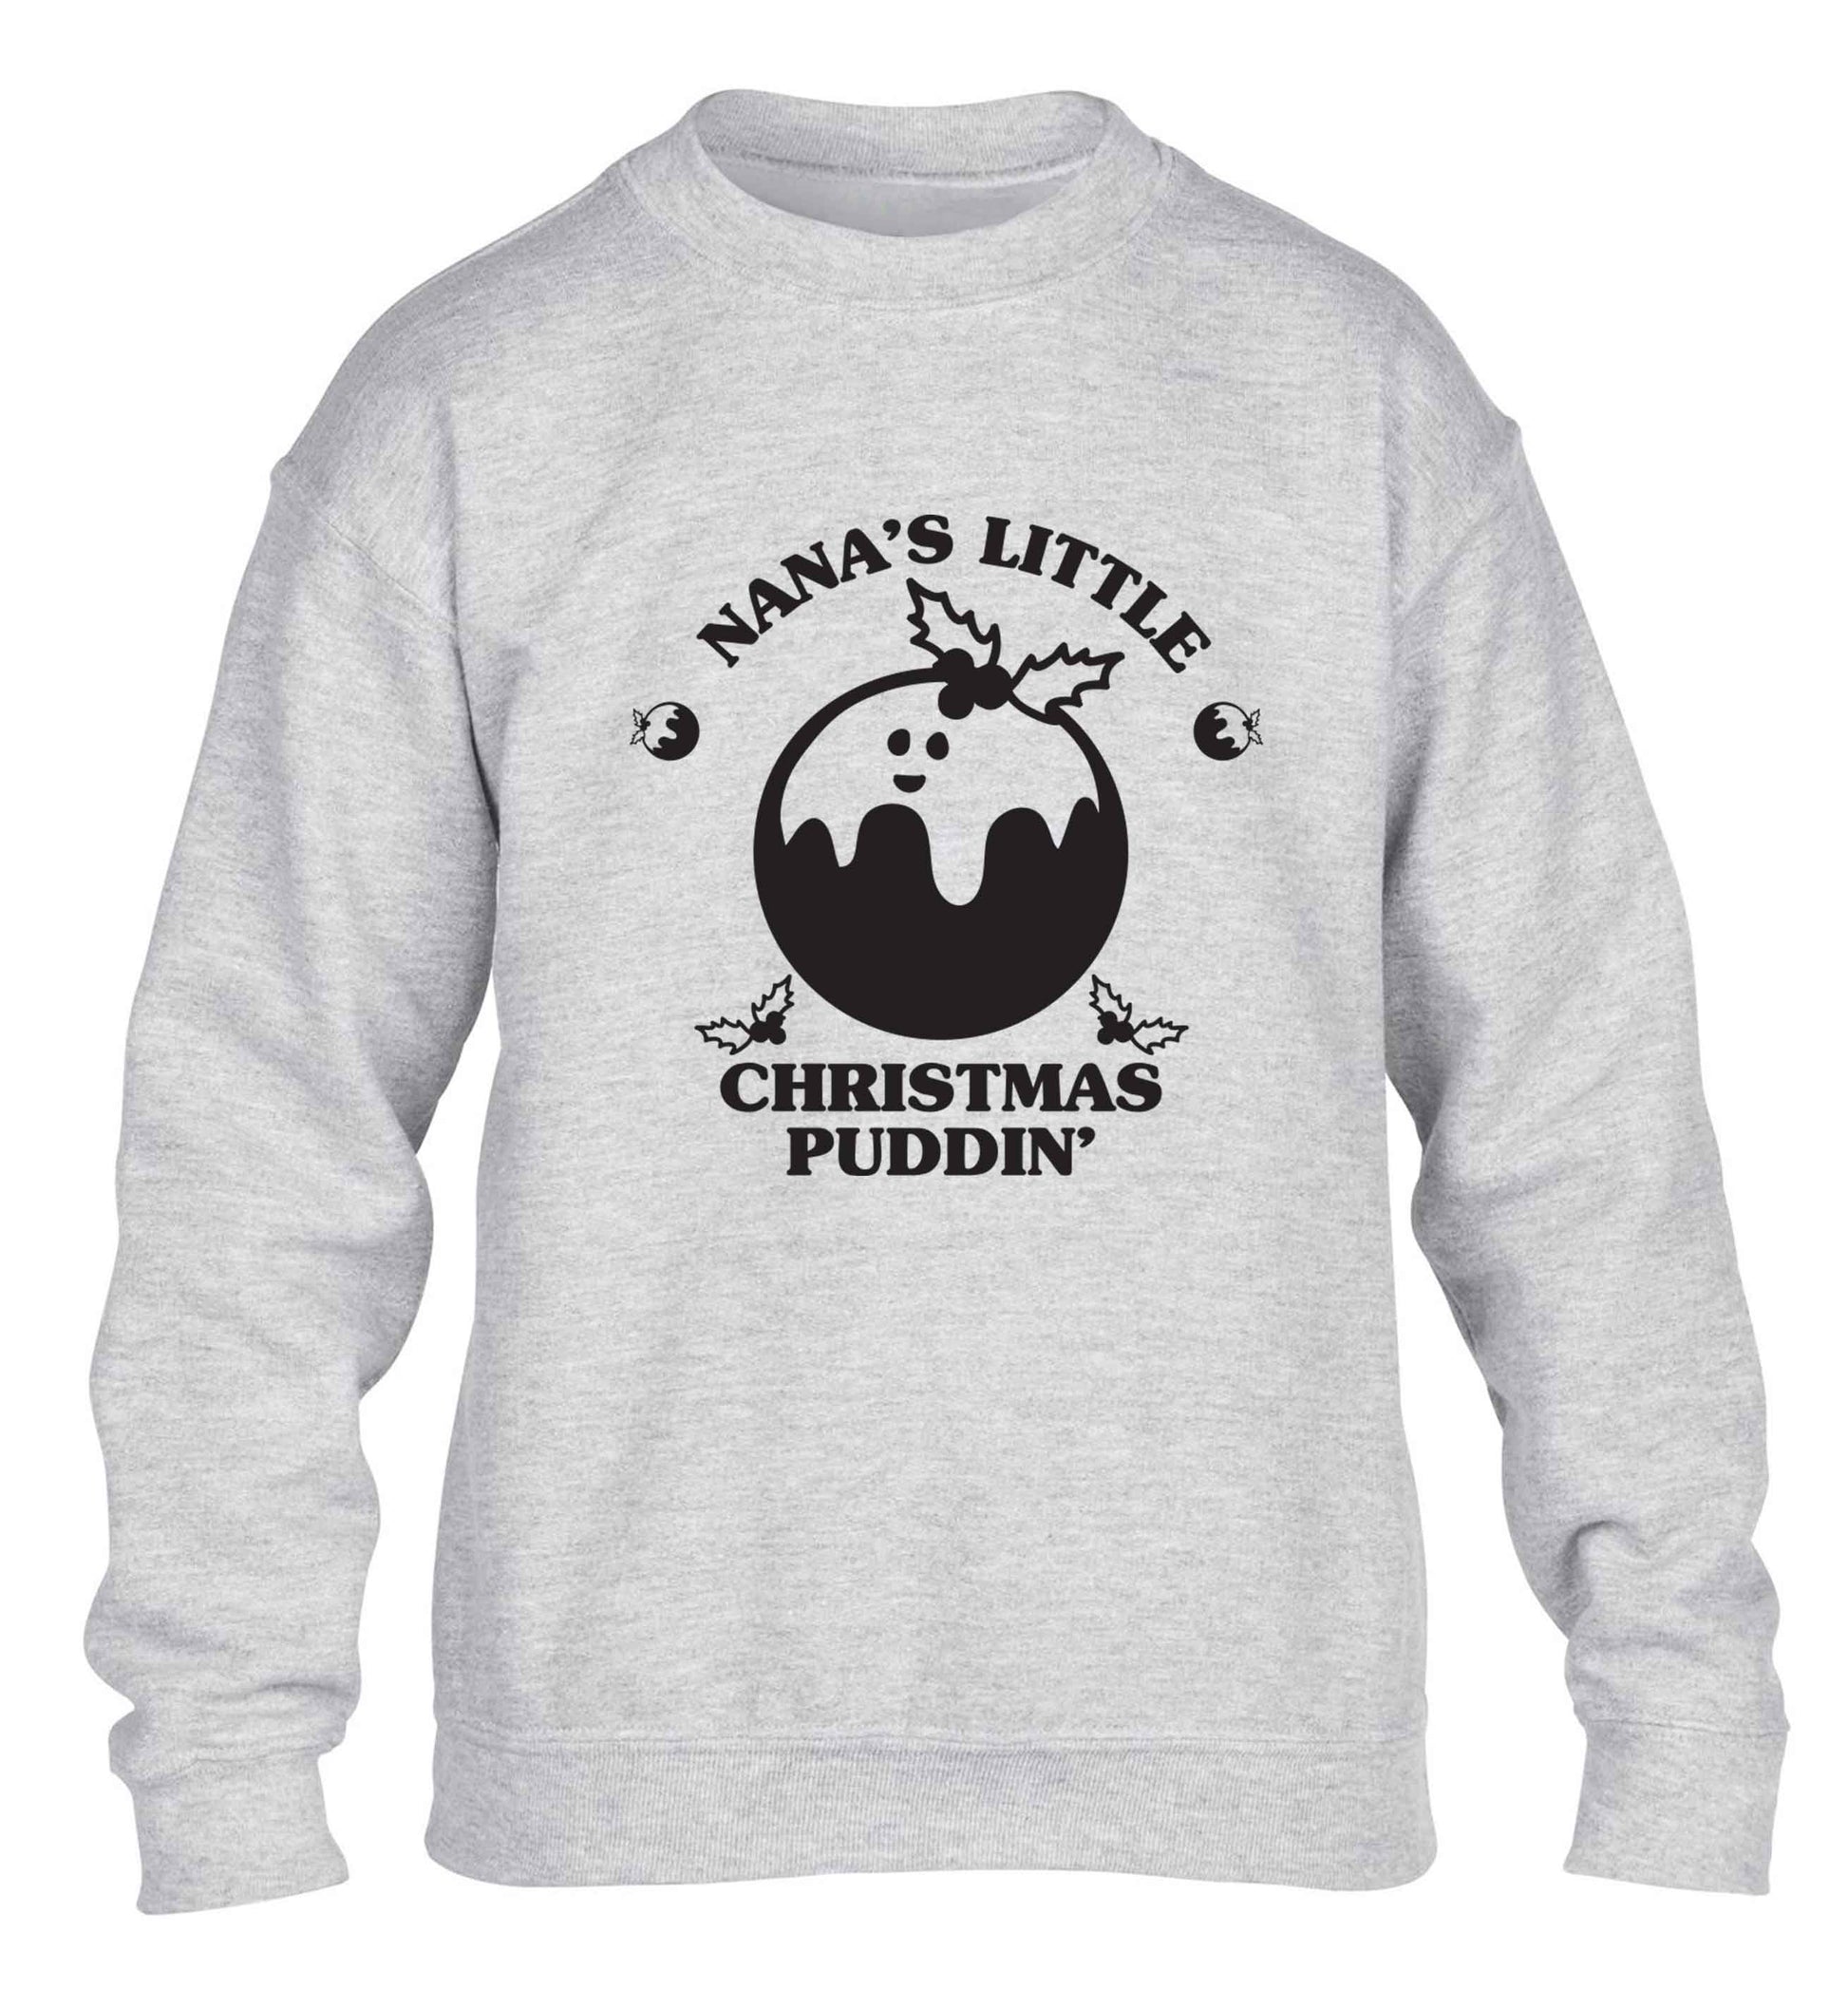 Nana's little Christmas puddin' children's grey sweater 12-13 Years